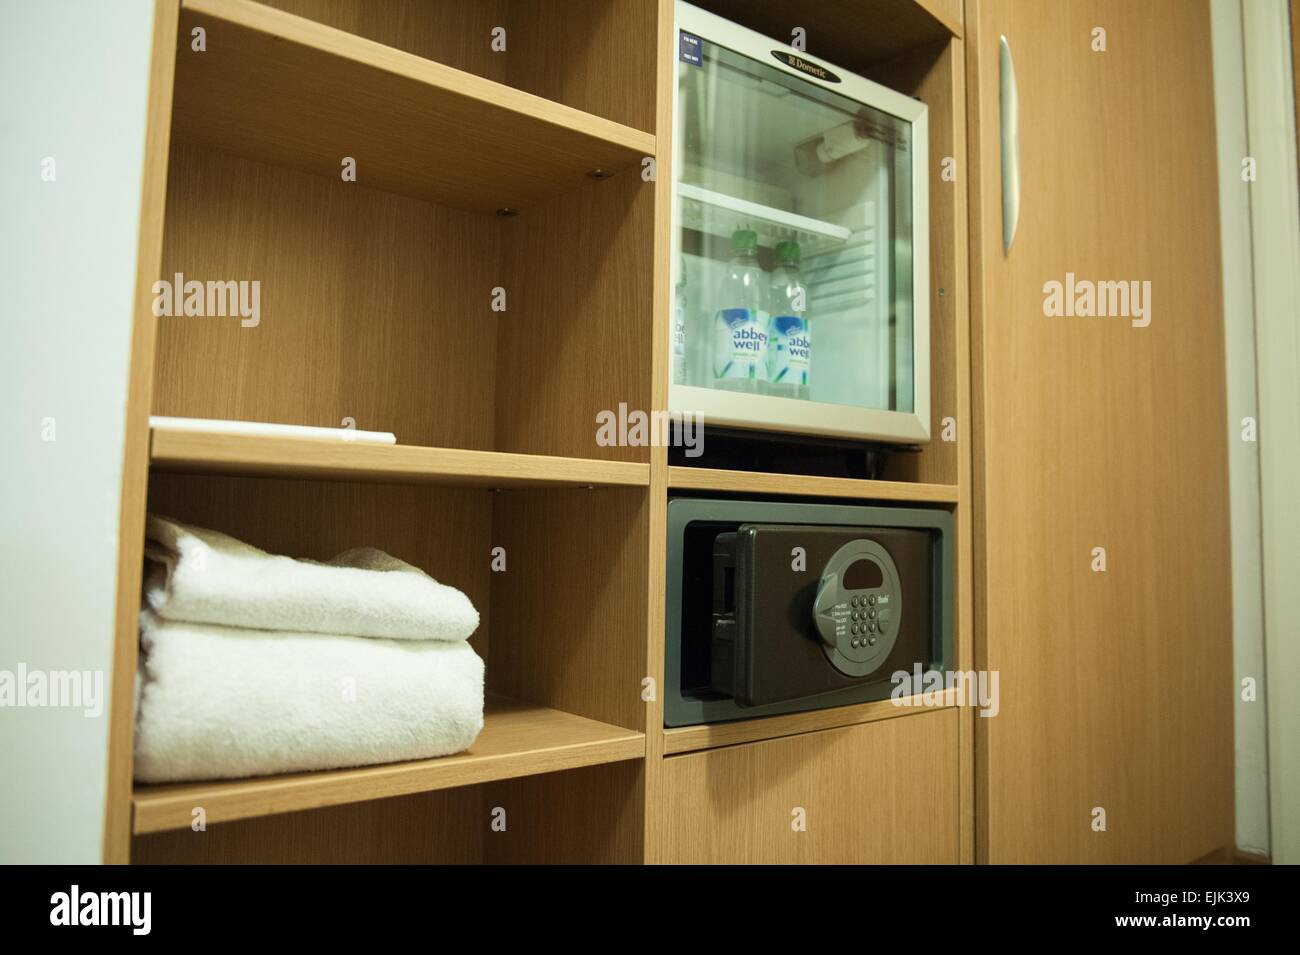 Novotel hotel room mini bar fridge and safe Stock Photo